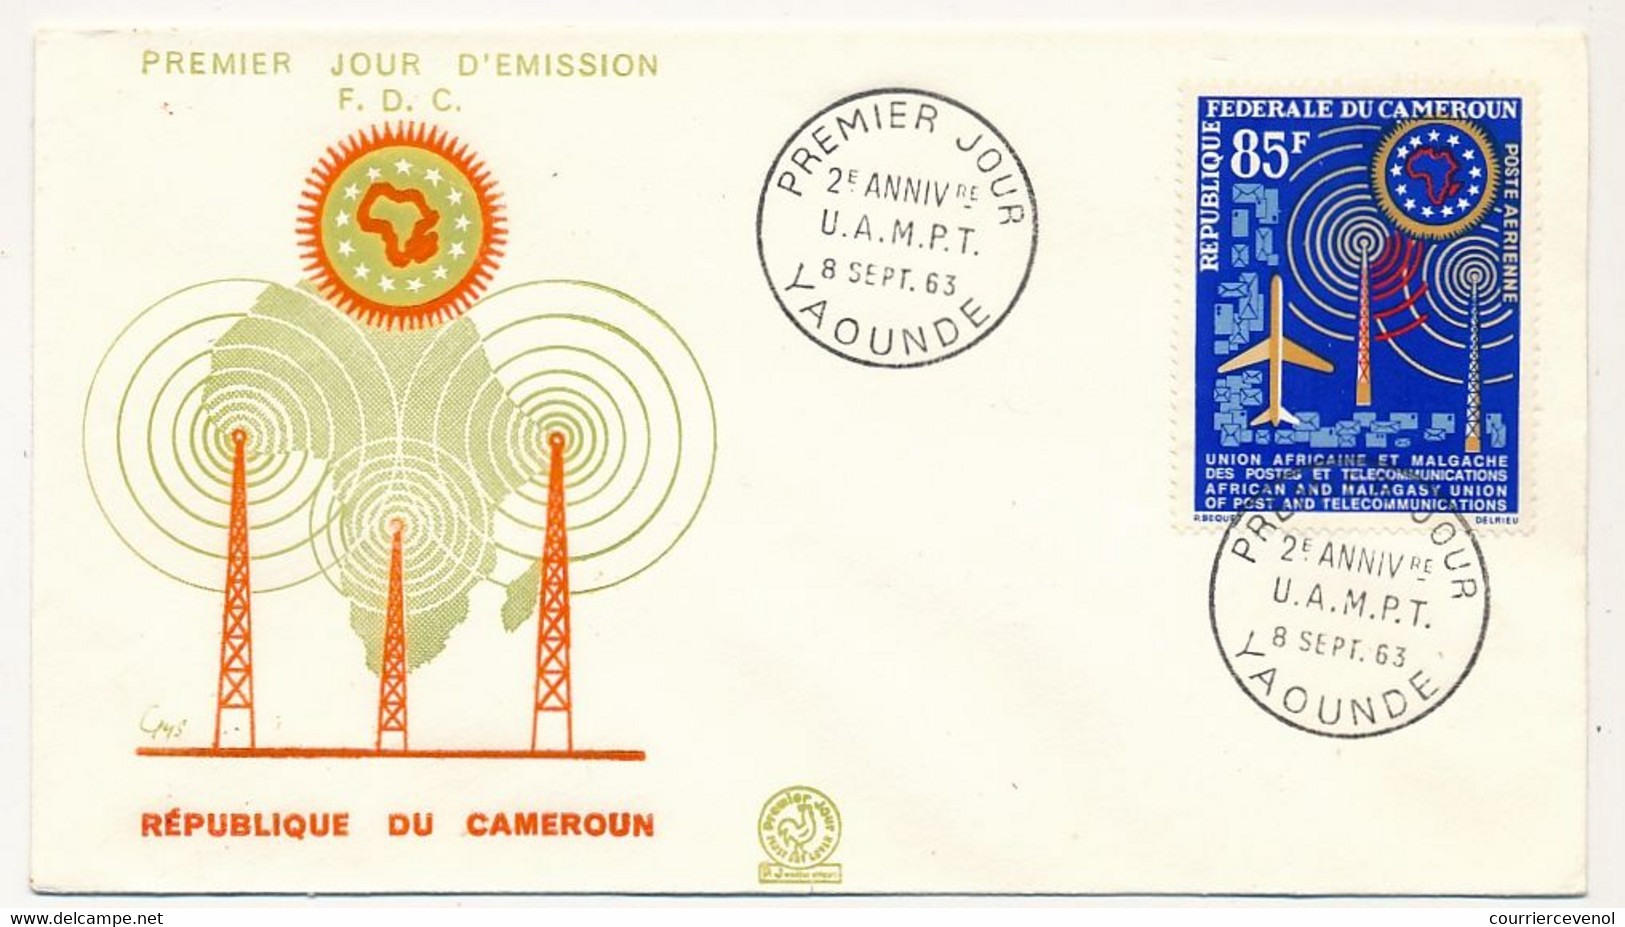 CAMEROUN => Enveloppe FDC - 85F 2eme Anniversaire UAMPT - 8 Sept 1983 - Yaoundé - Camerun (1960-...)